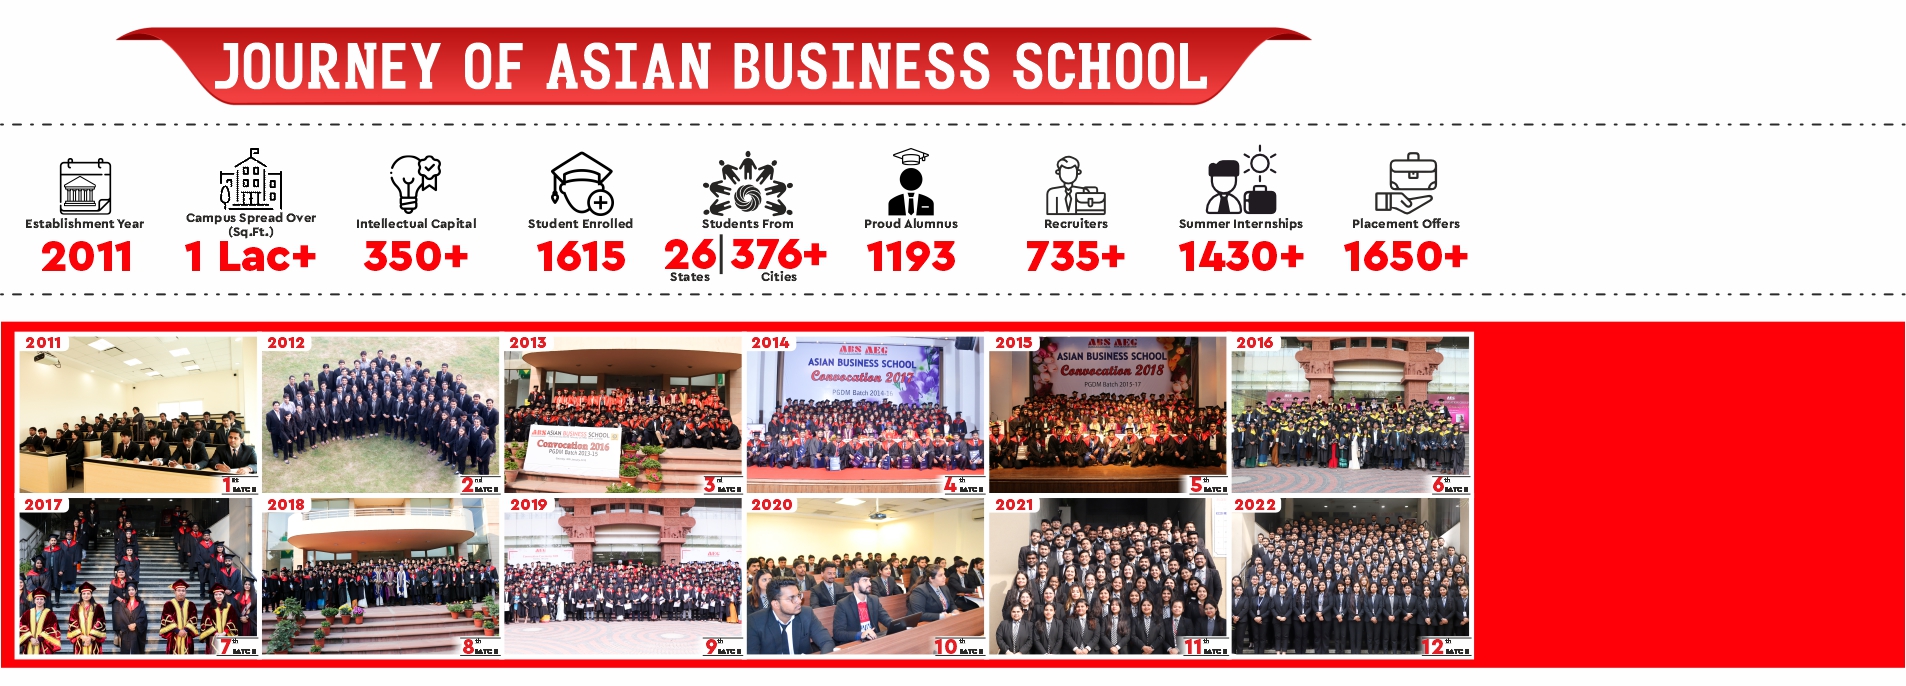 JOURNEY OF ASIAN BUSINESS SCHOOL